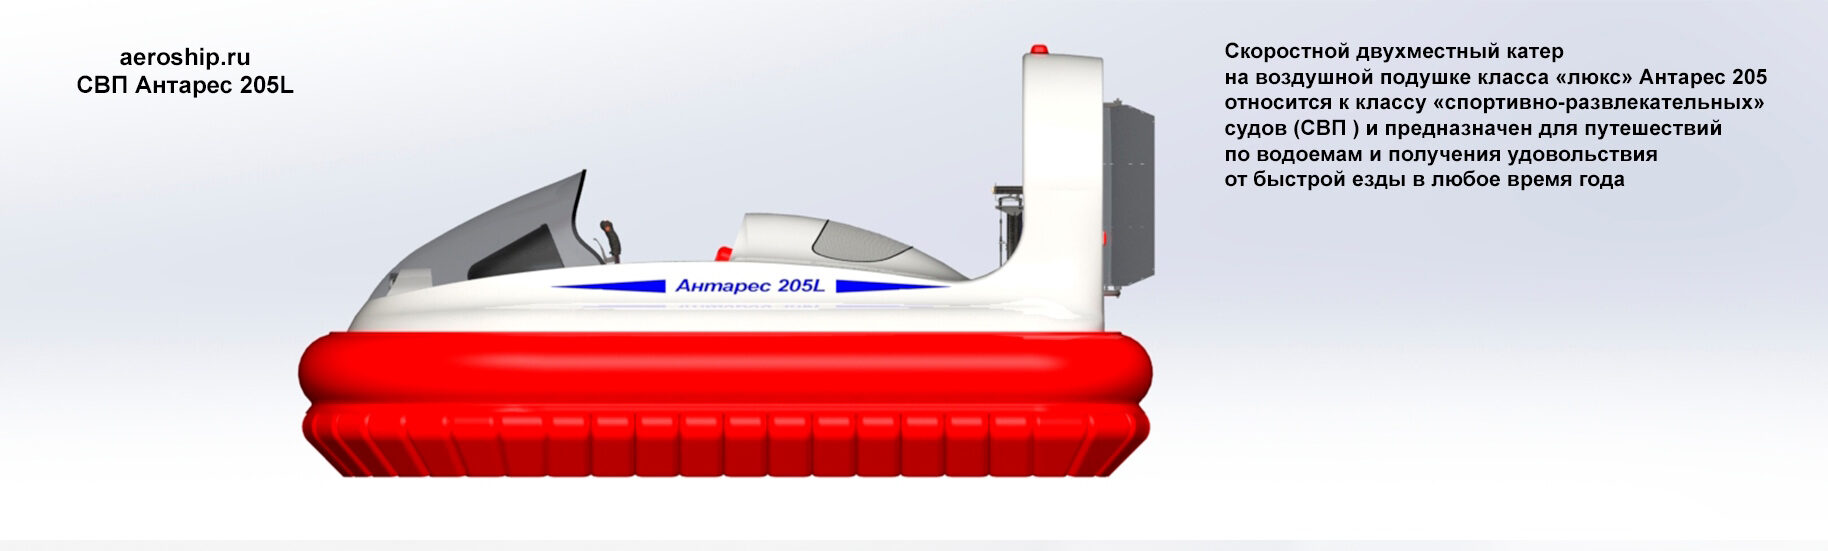 Судно на воздушной подушке Антарес 205L Продажа, изготовление